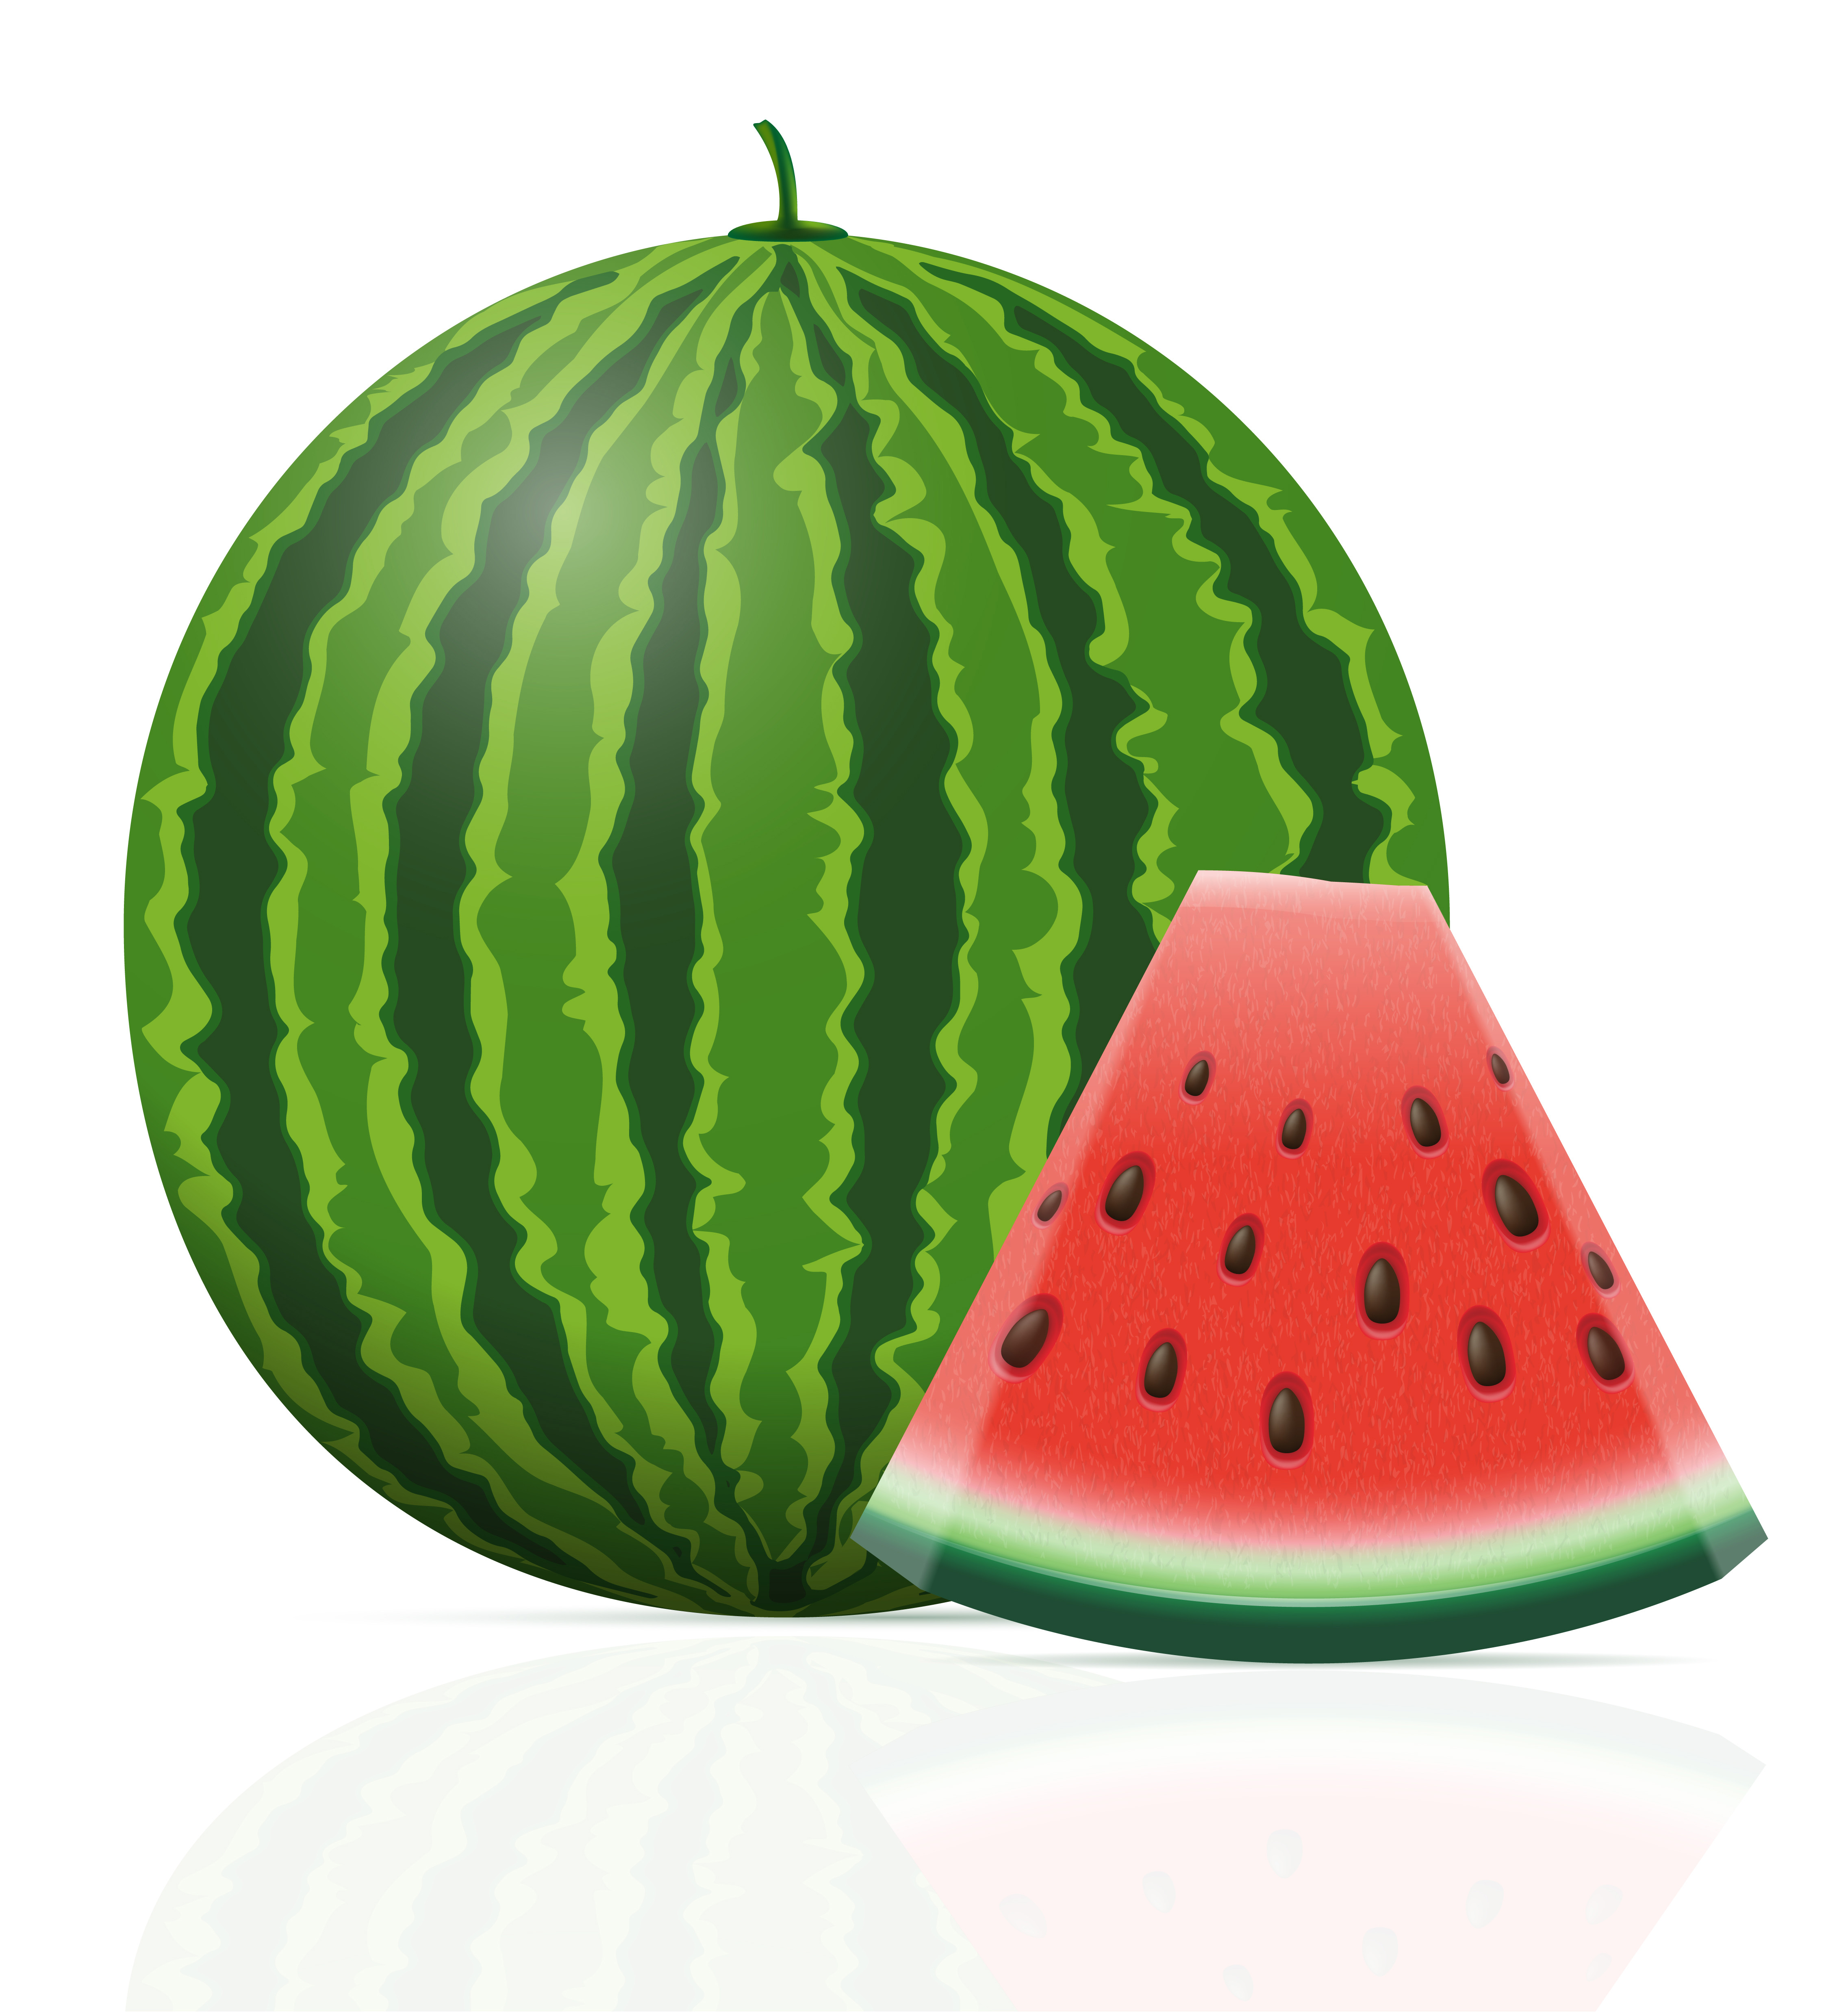 Download watermelon ripe juicy vector illustration 492693 - Download Free Vectors, Clipart Graphics ...